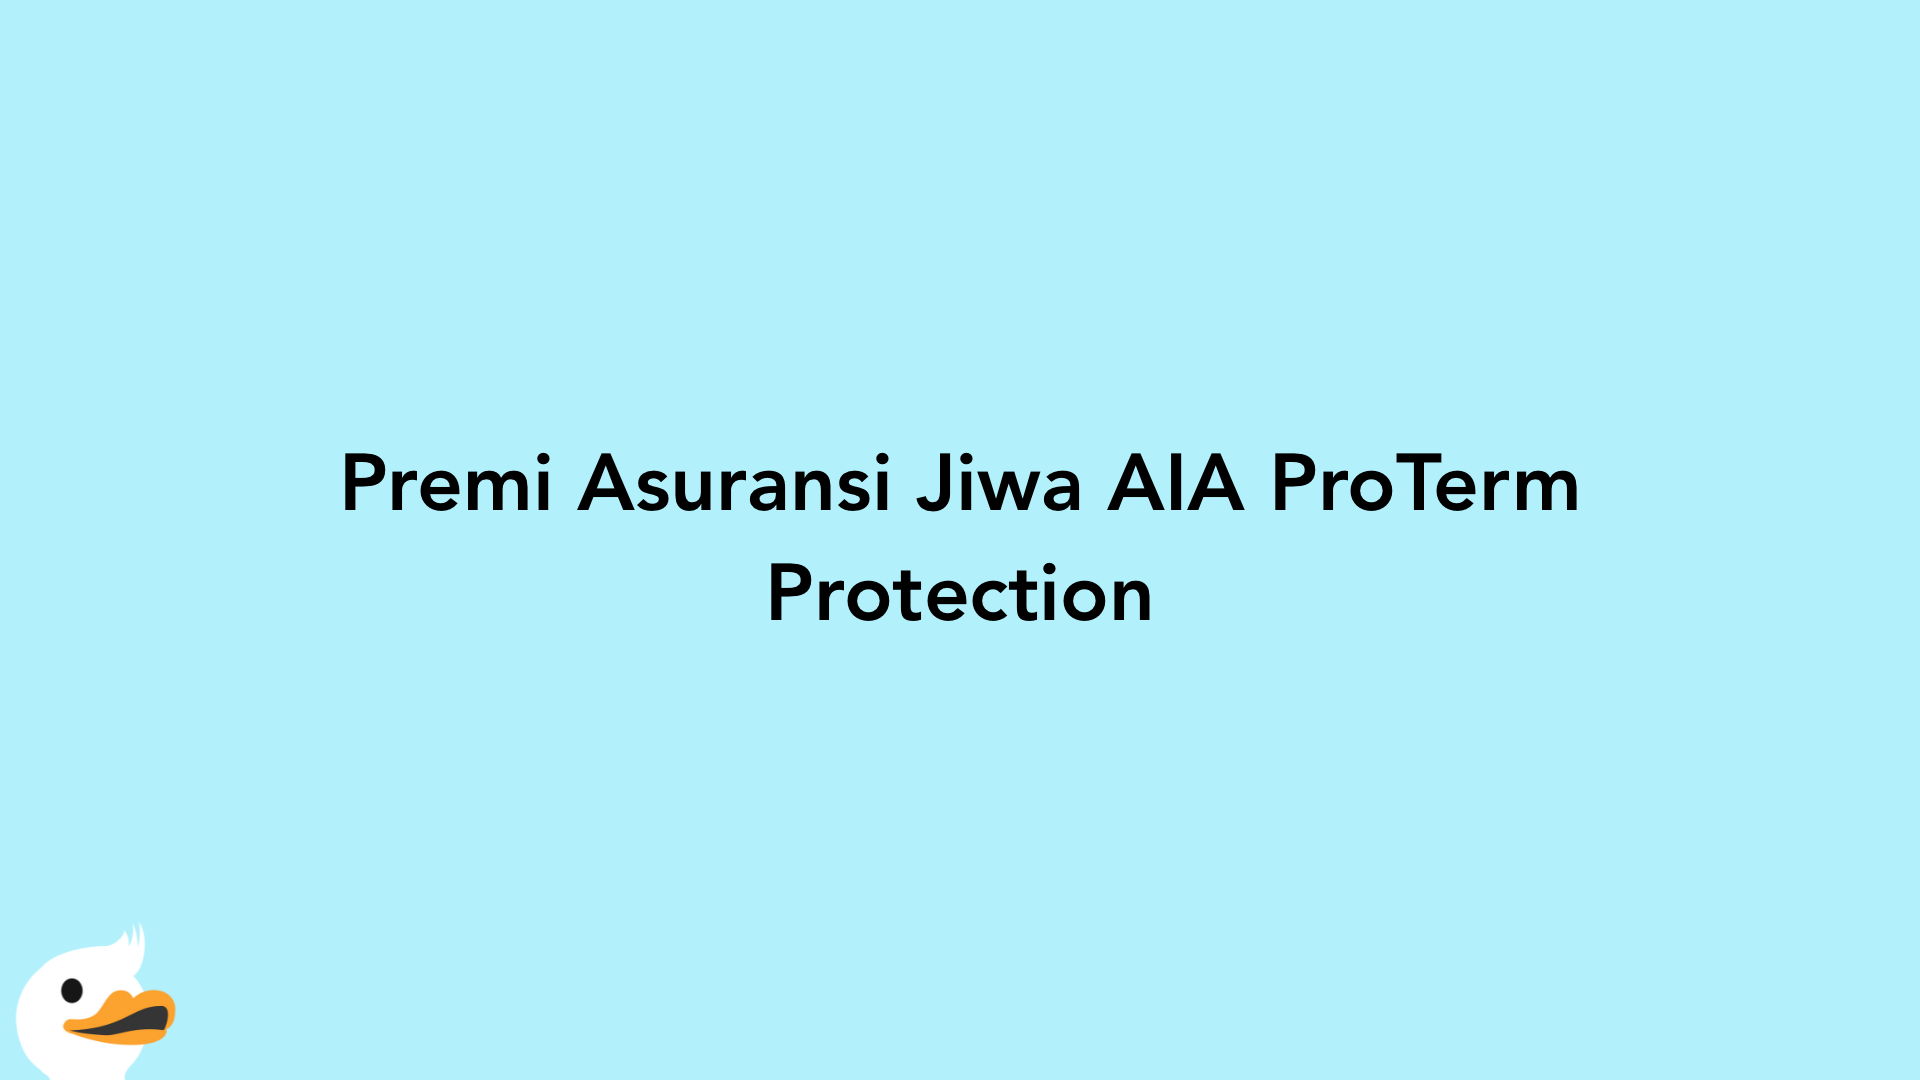 Premi Asuransi Jiwa AIA ProTerm Protection